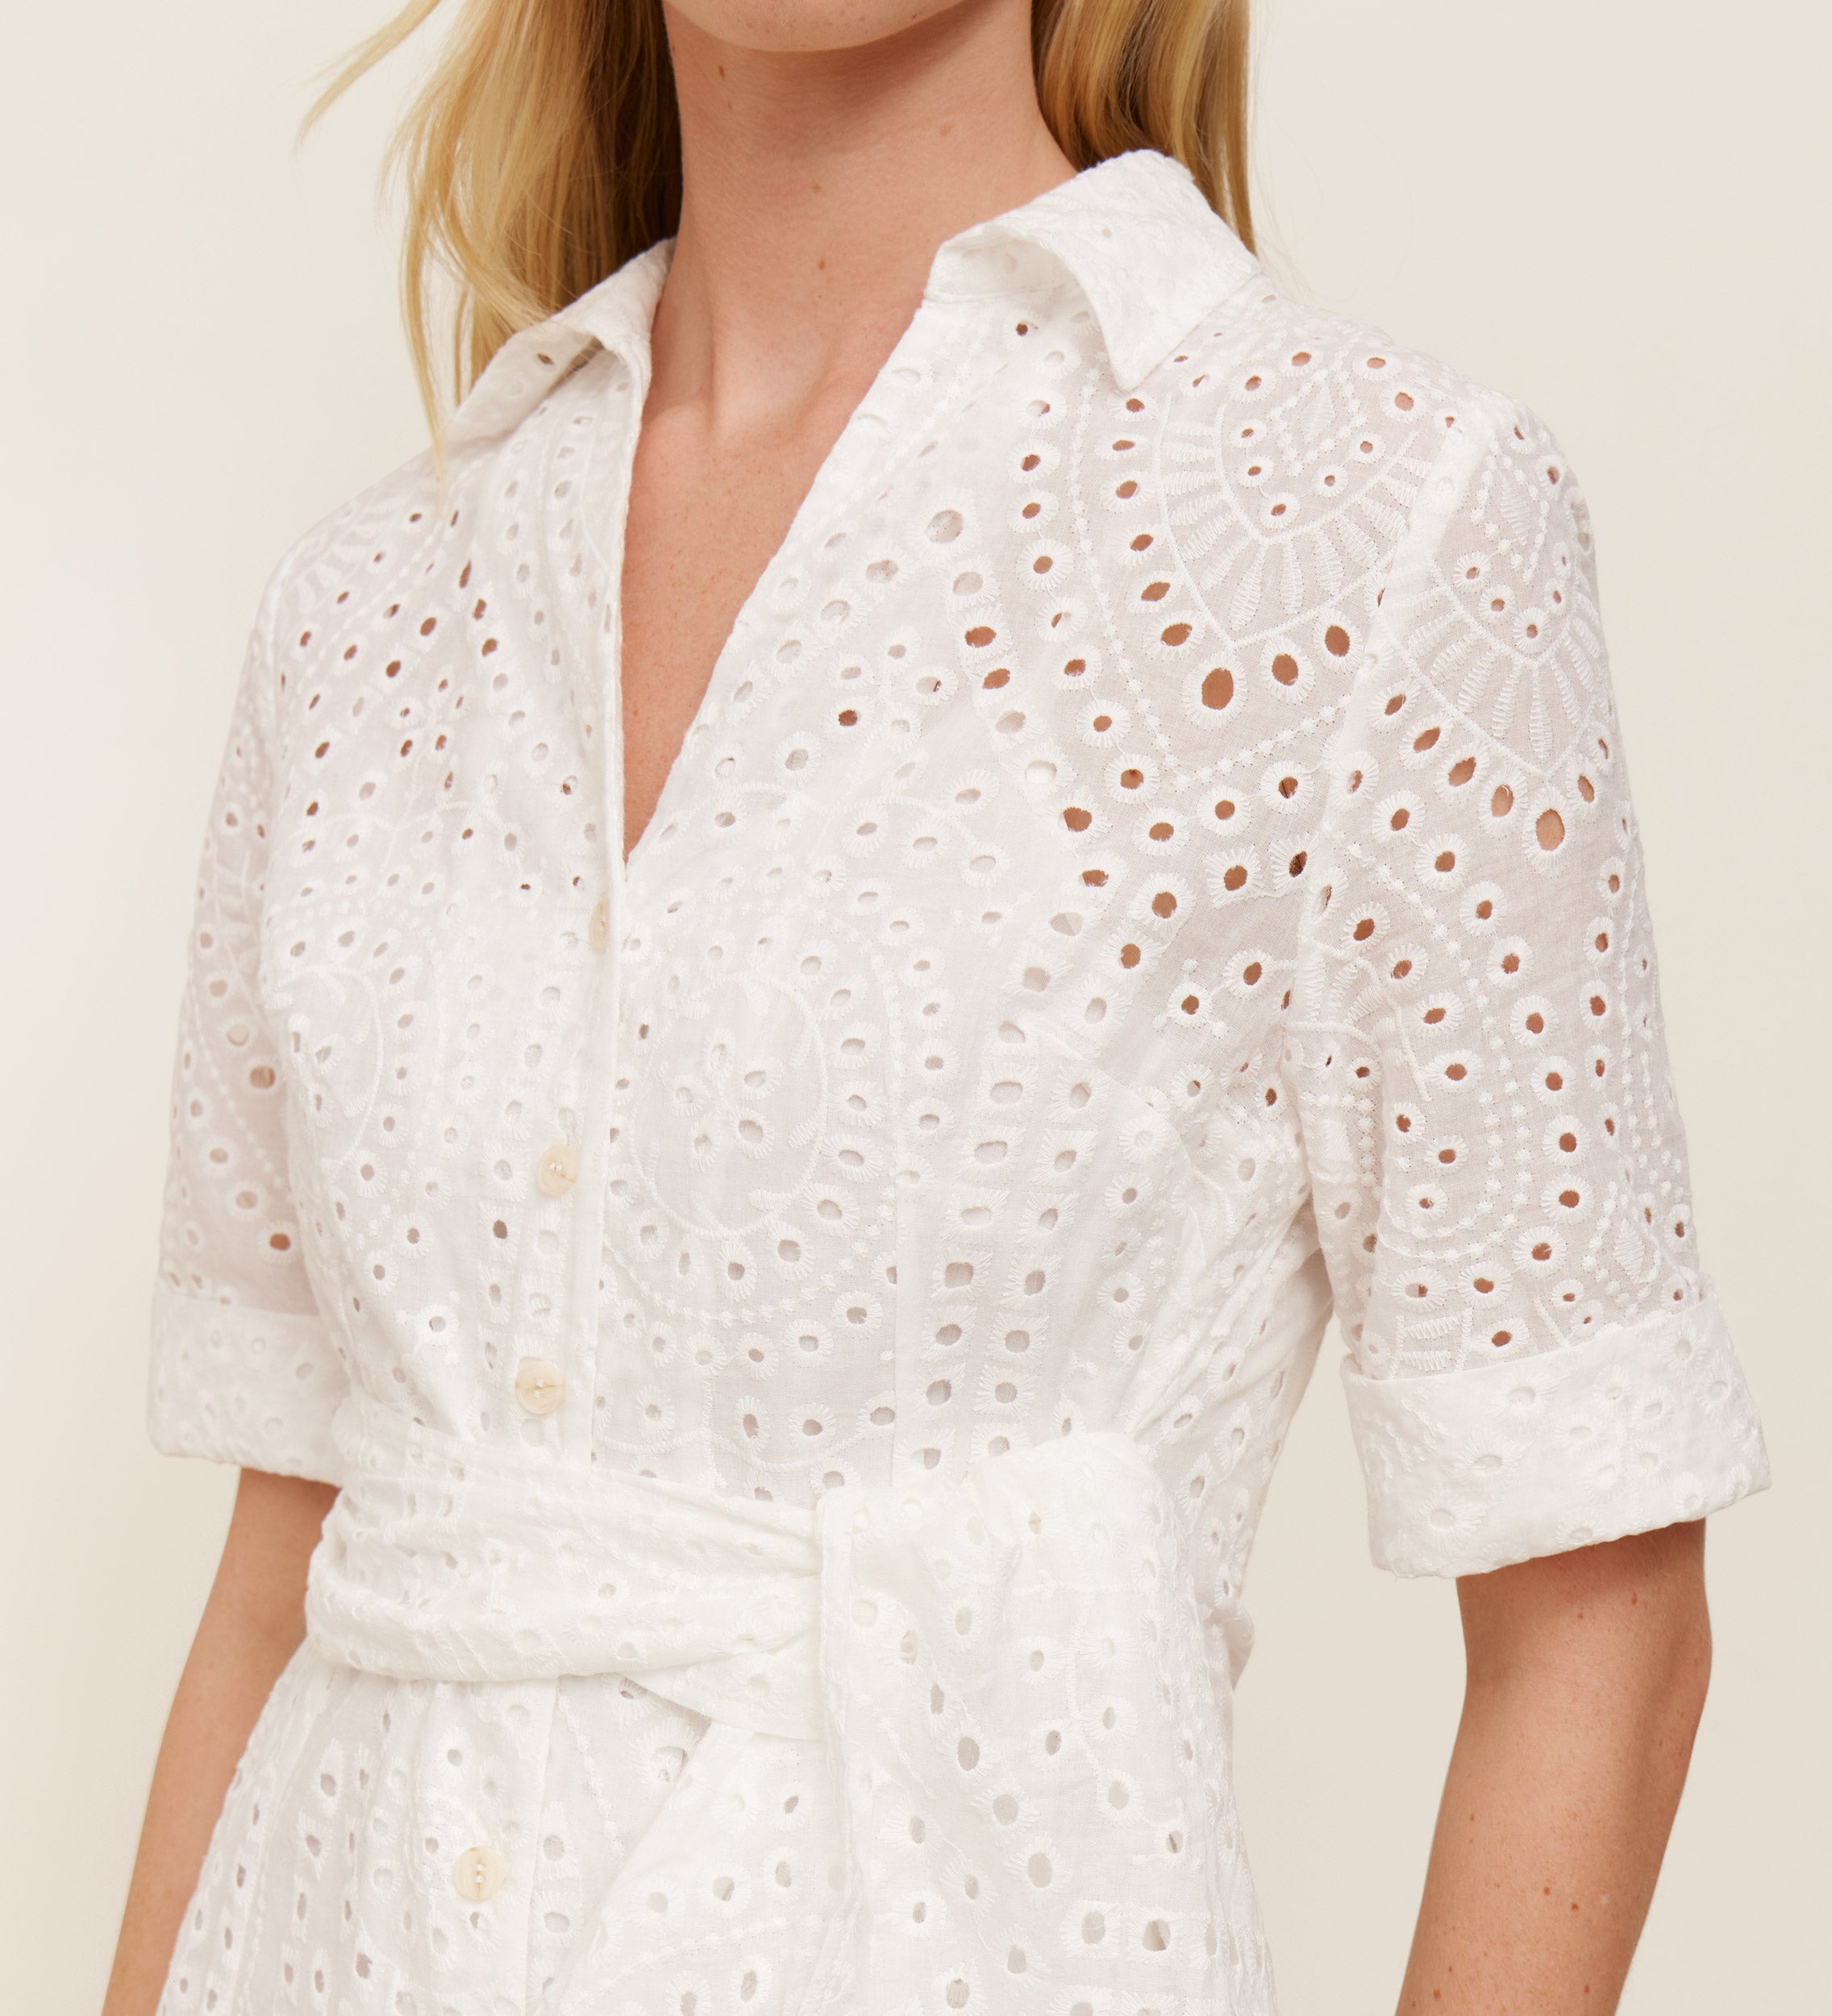 Embroidered cotton shirt dress